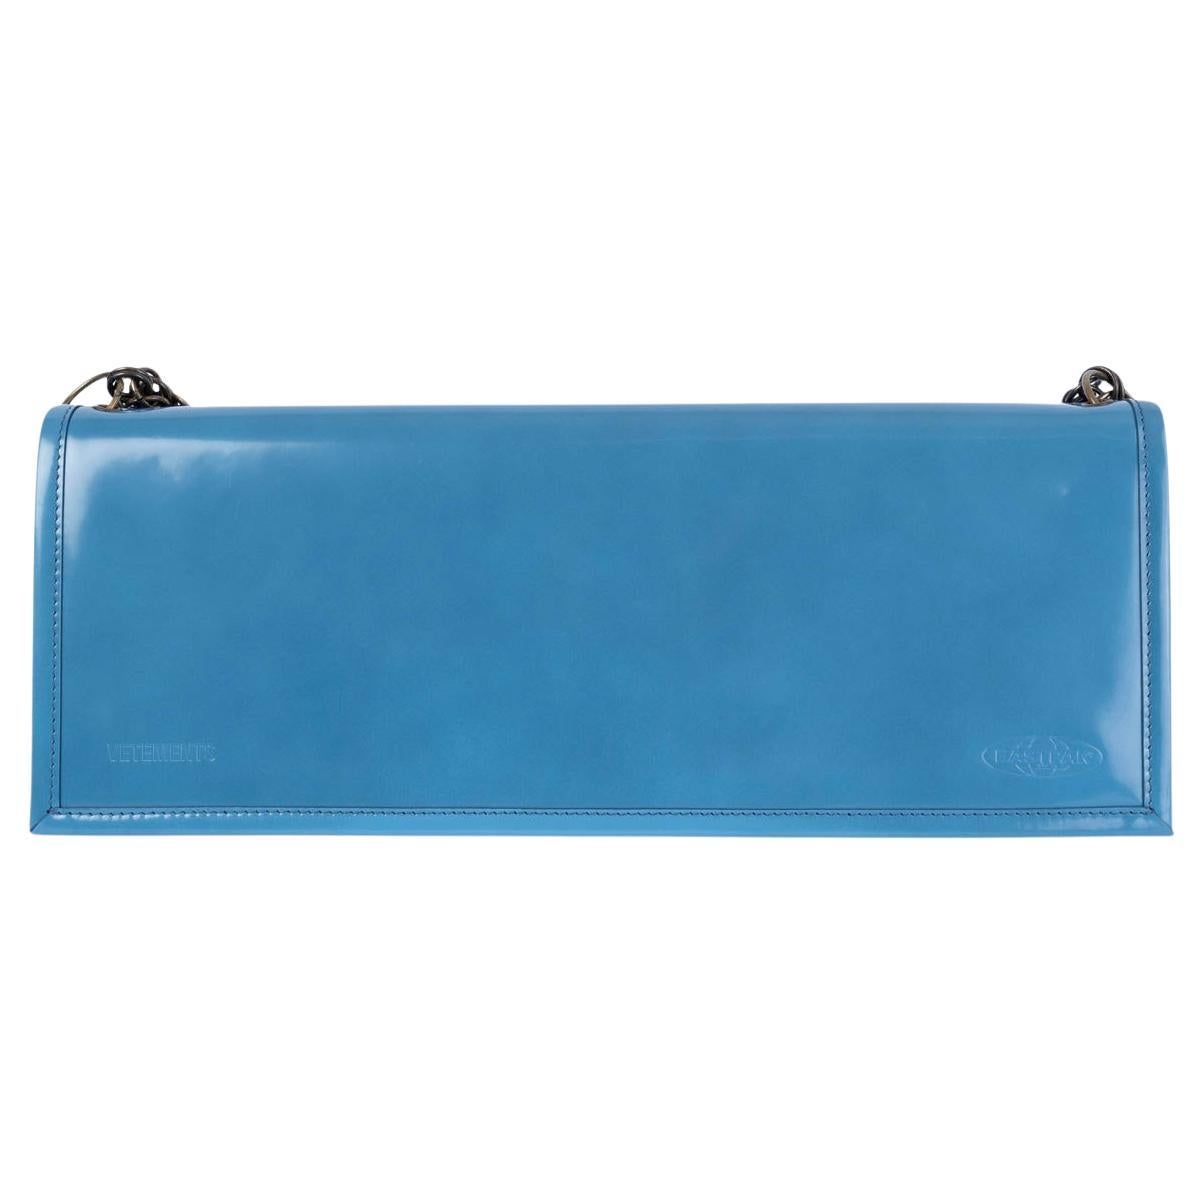 VETEMENTS x EASTPAK blue leather 2017 CHAIN Clutch Bag For Sale